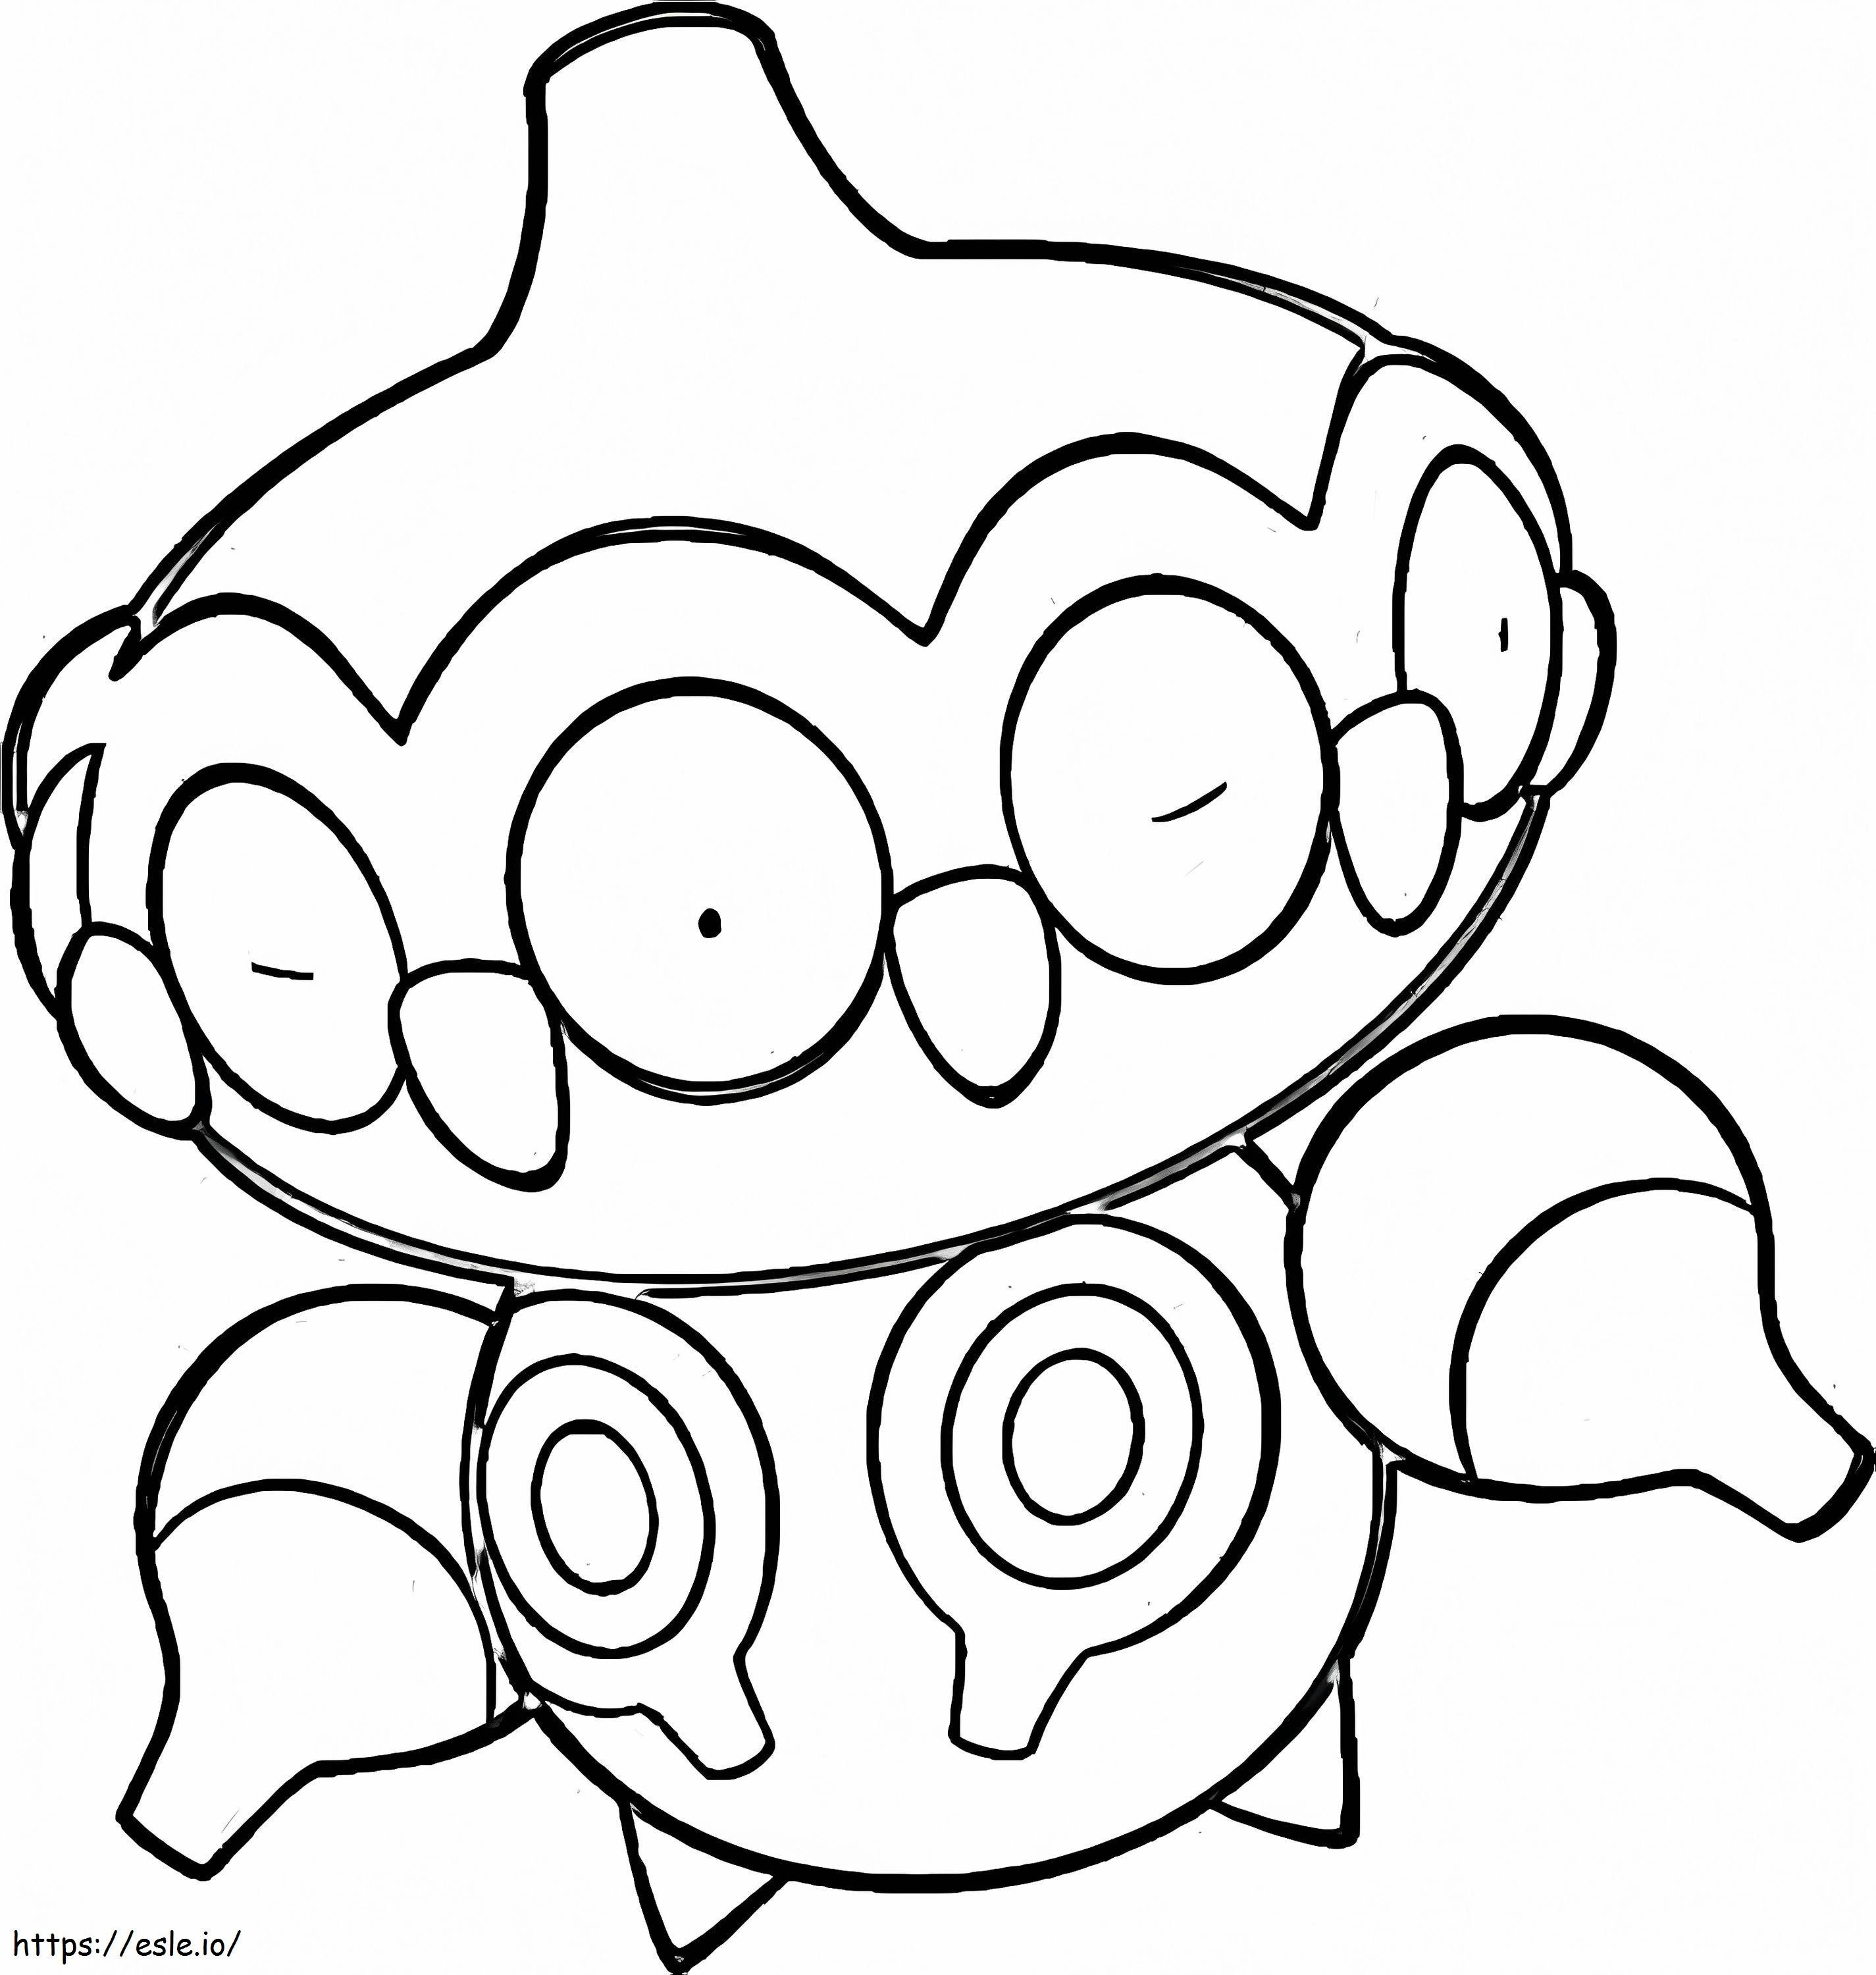 Coloriage Pokémon Claydol gratuit à imprimer dessin